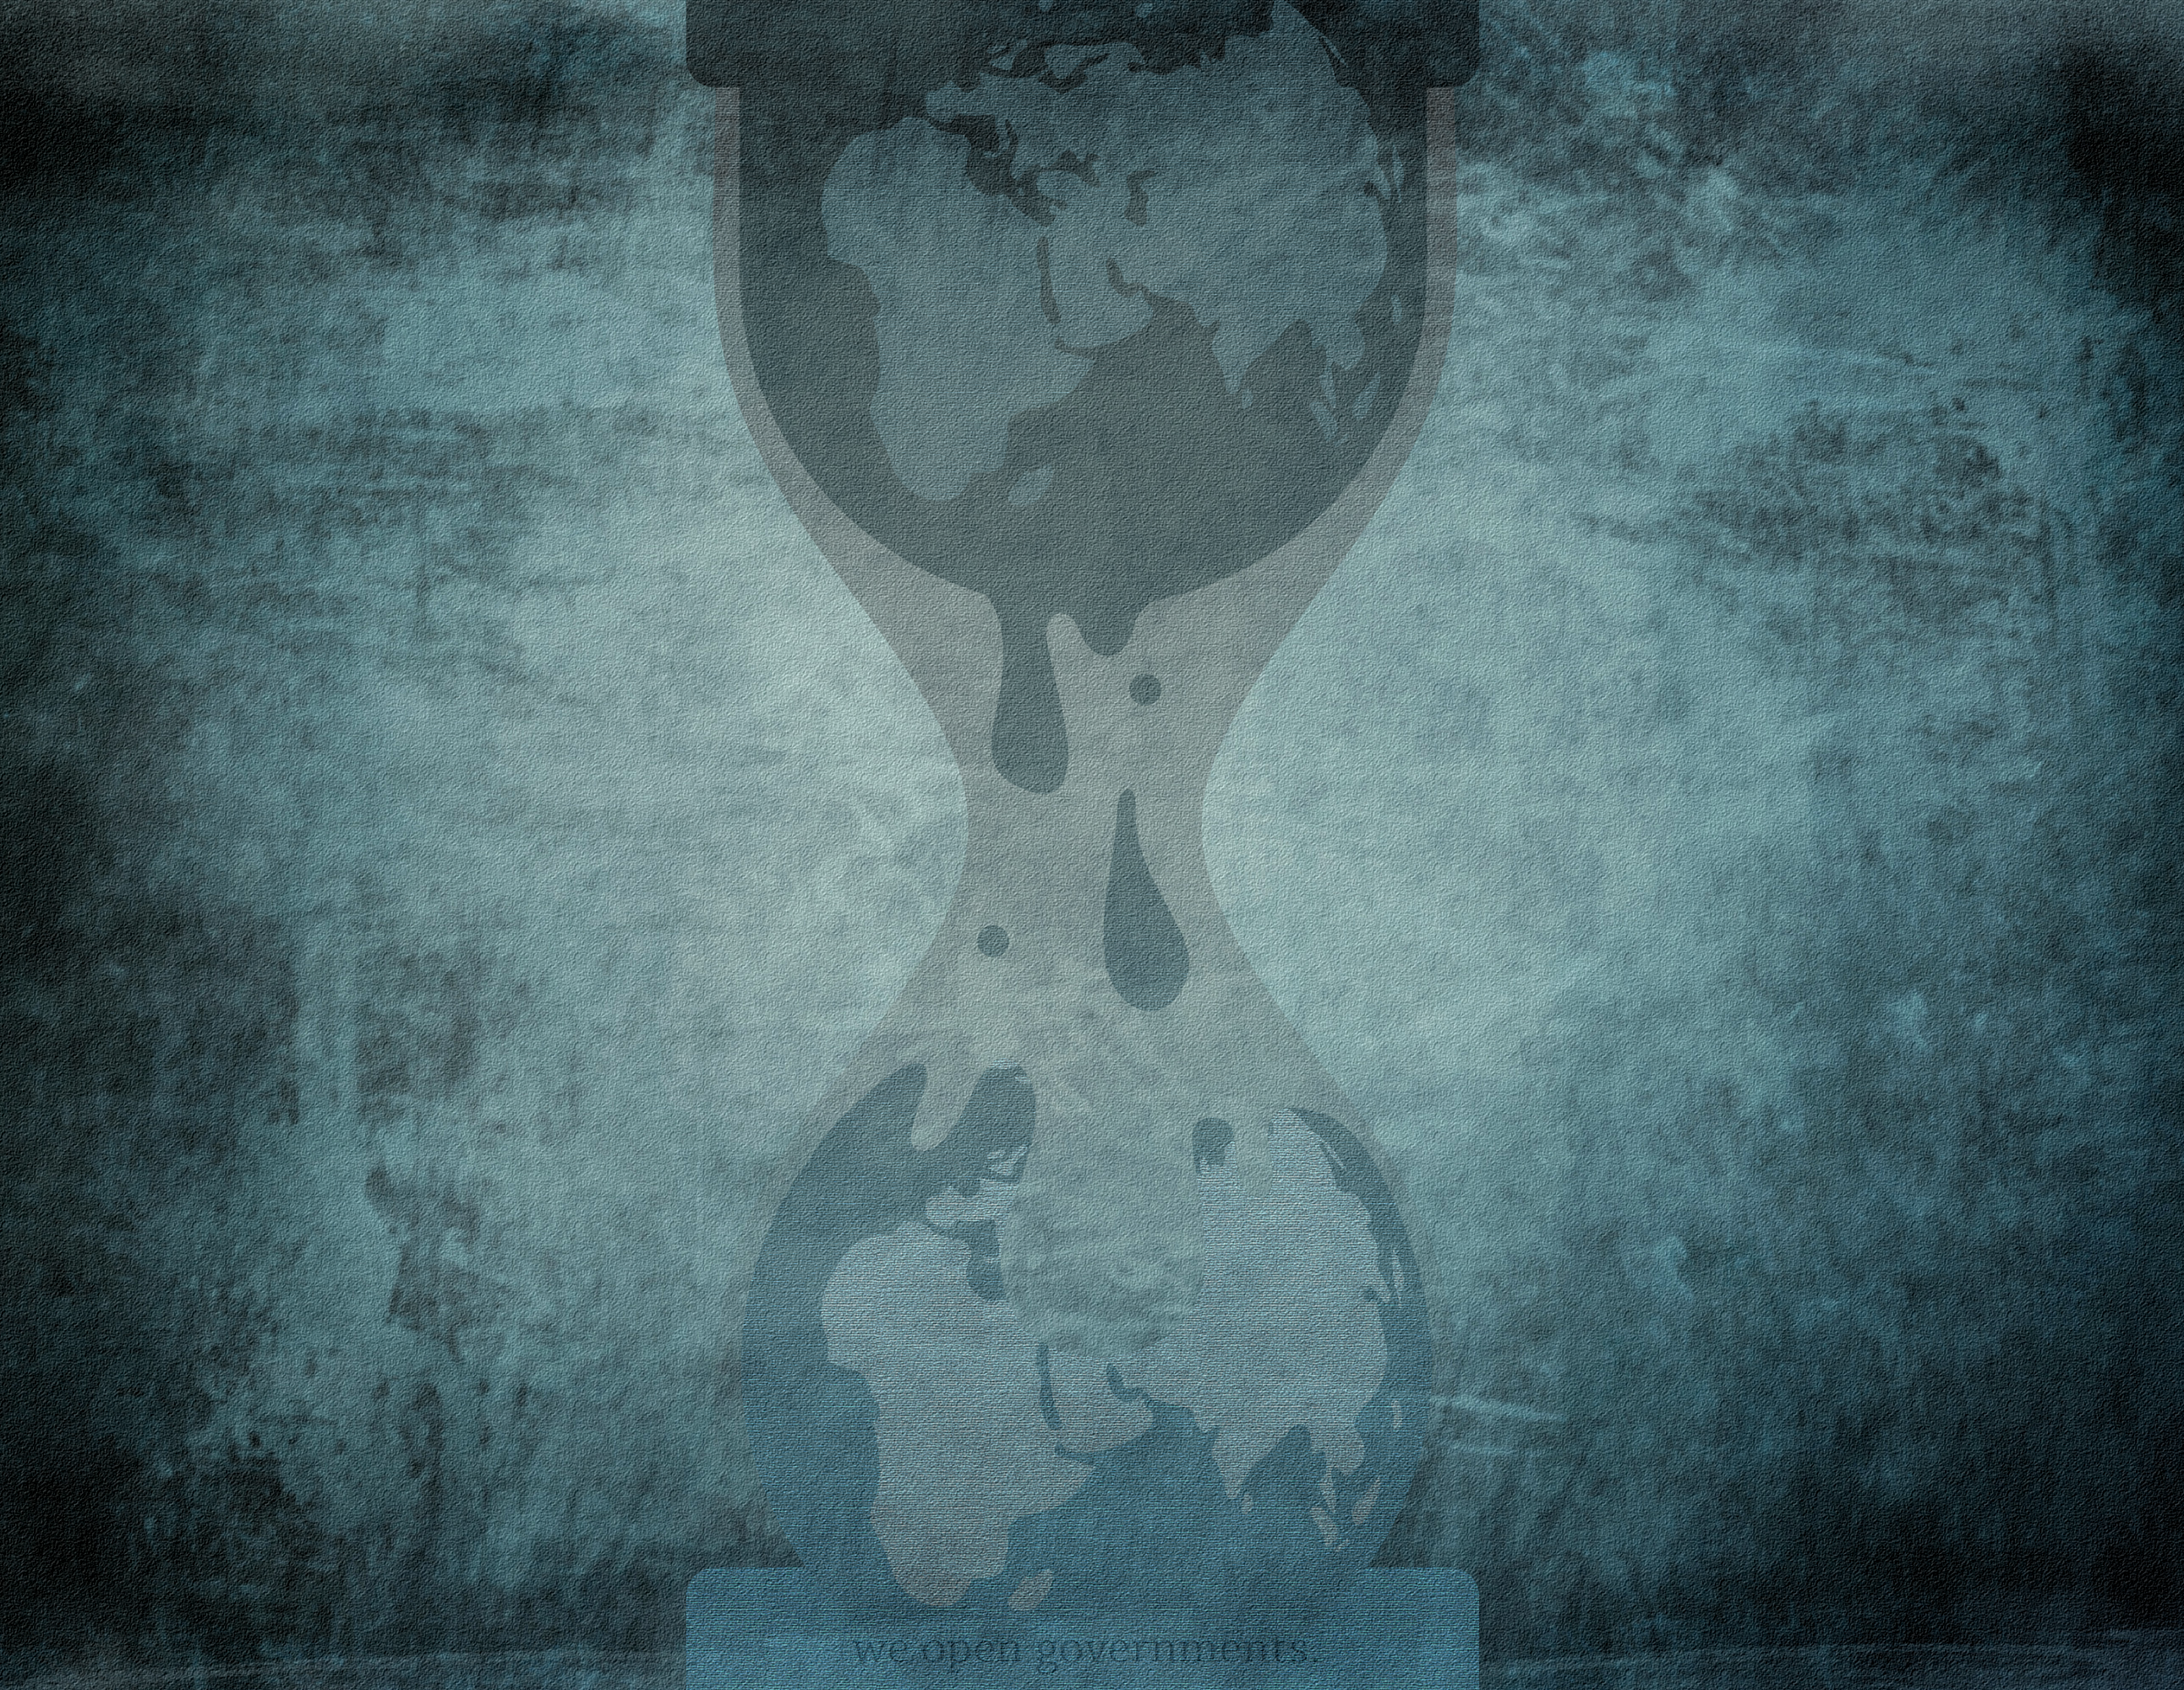 Wikileaks Hourglass By Bmmd Customization Wallpaper Political Created